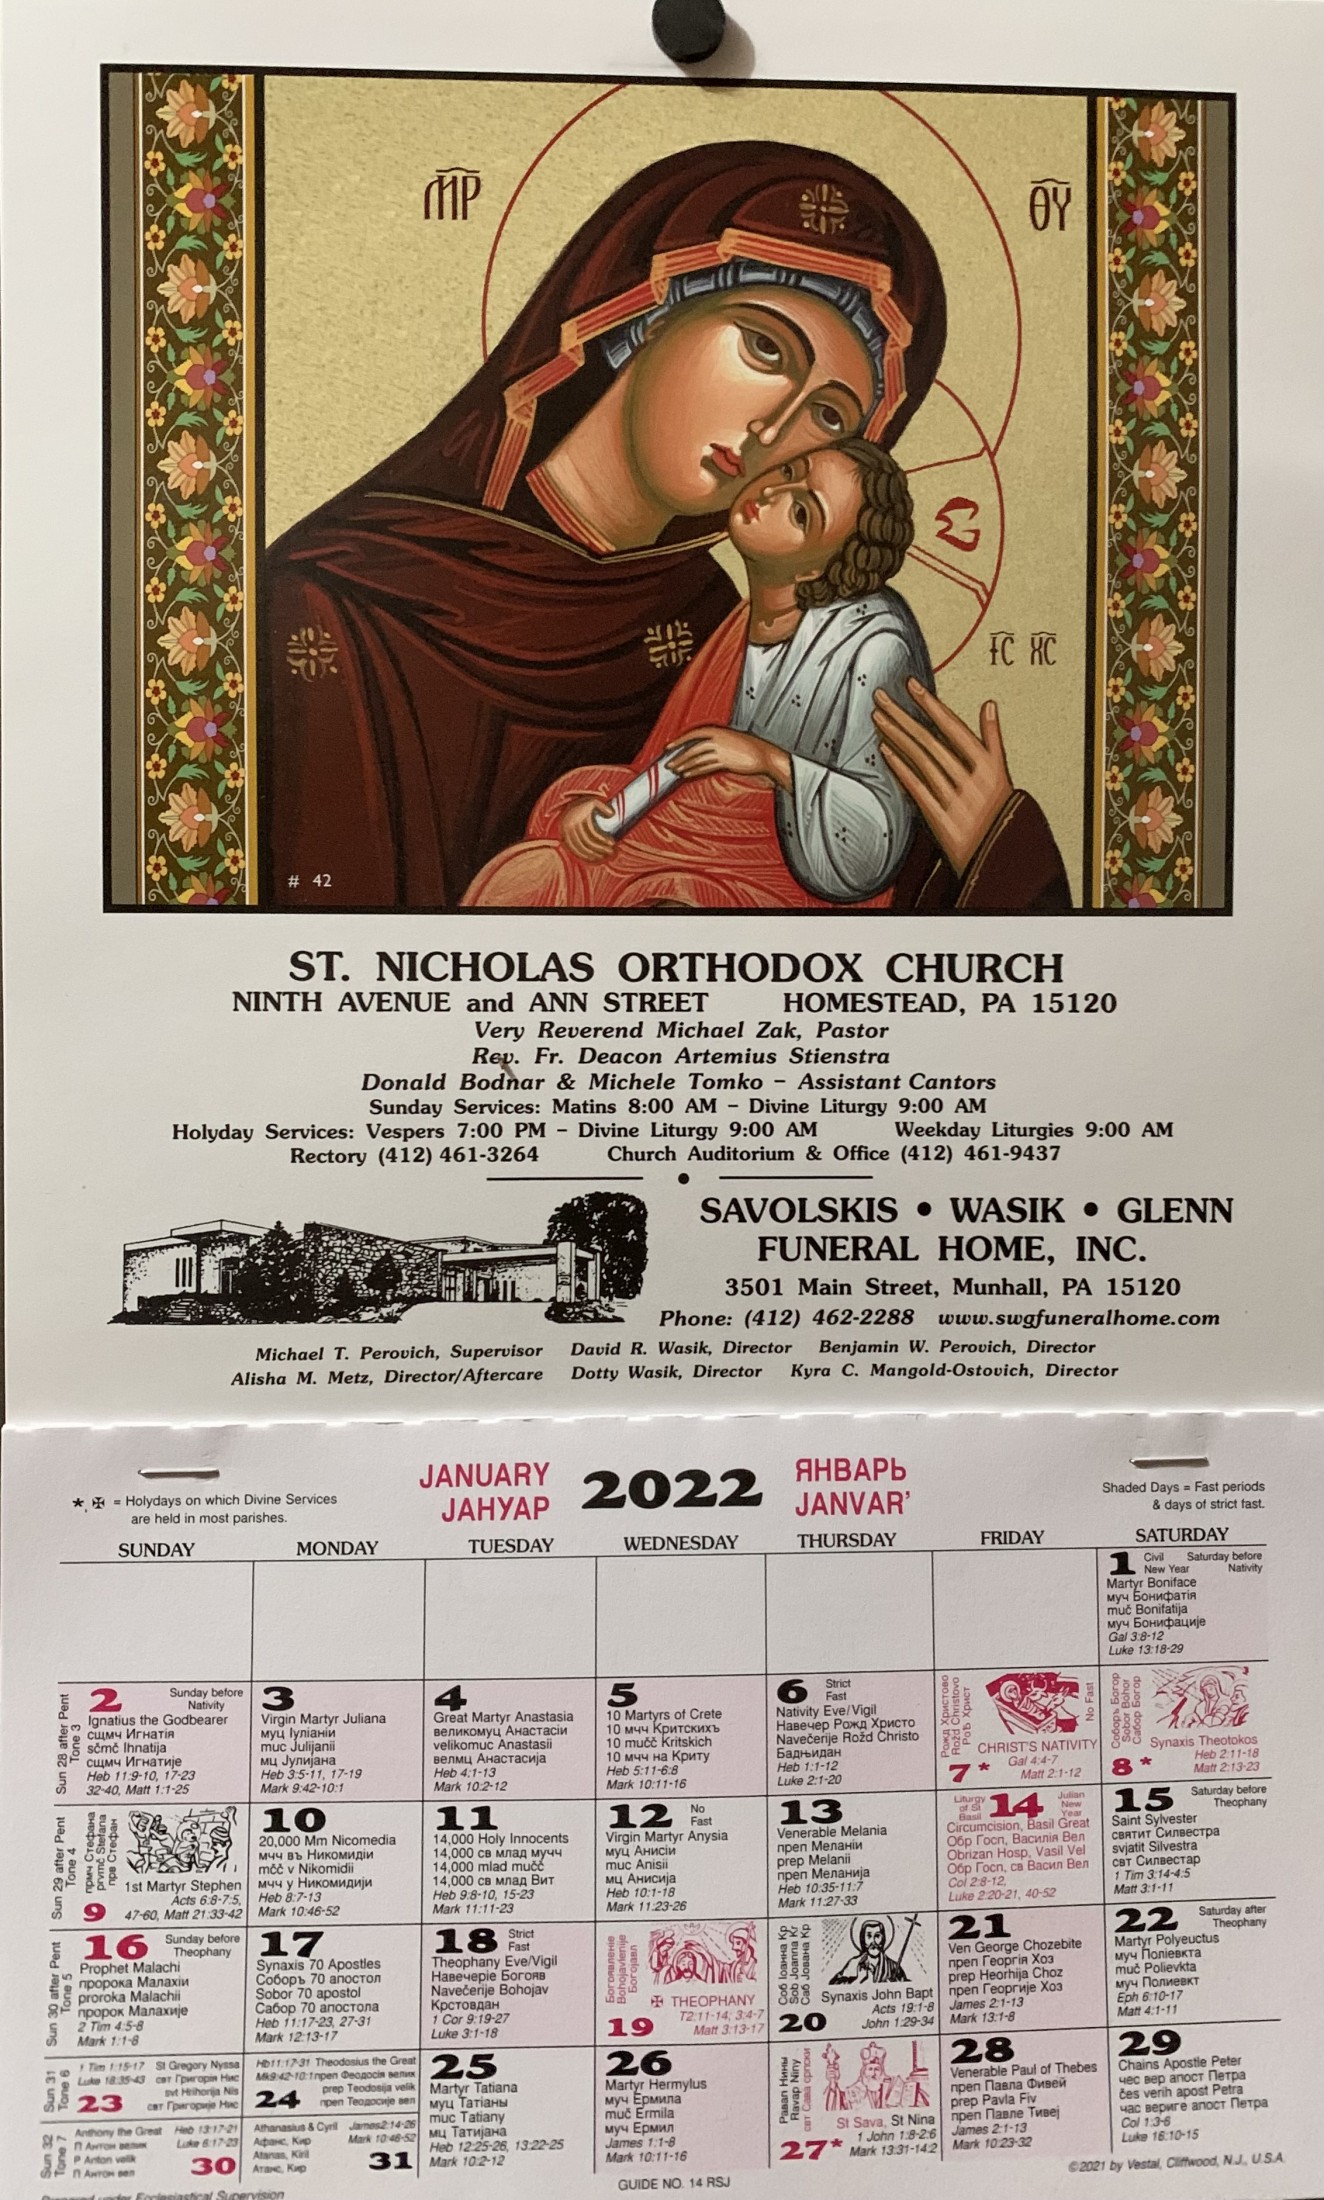 Wall Church Calendars for 2022 Available St. Nicholas Orthodox Church